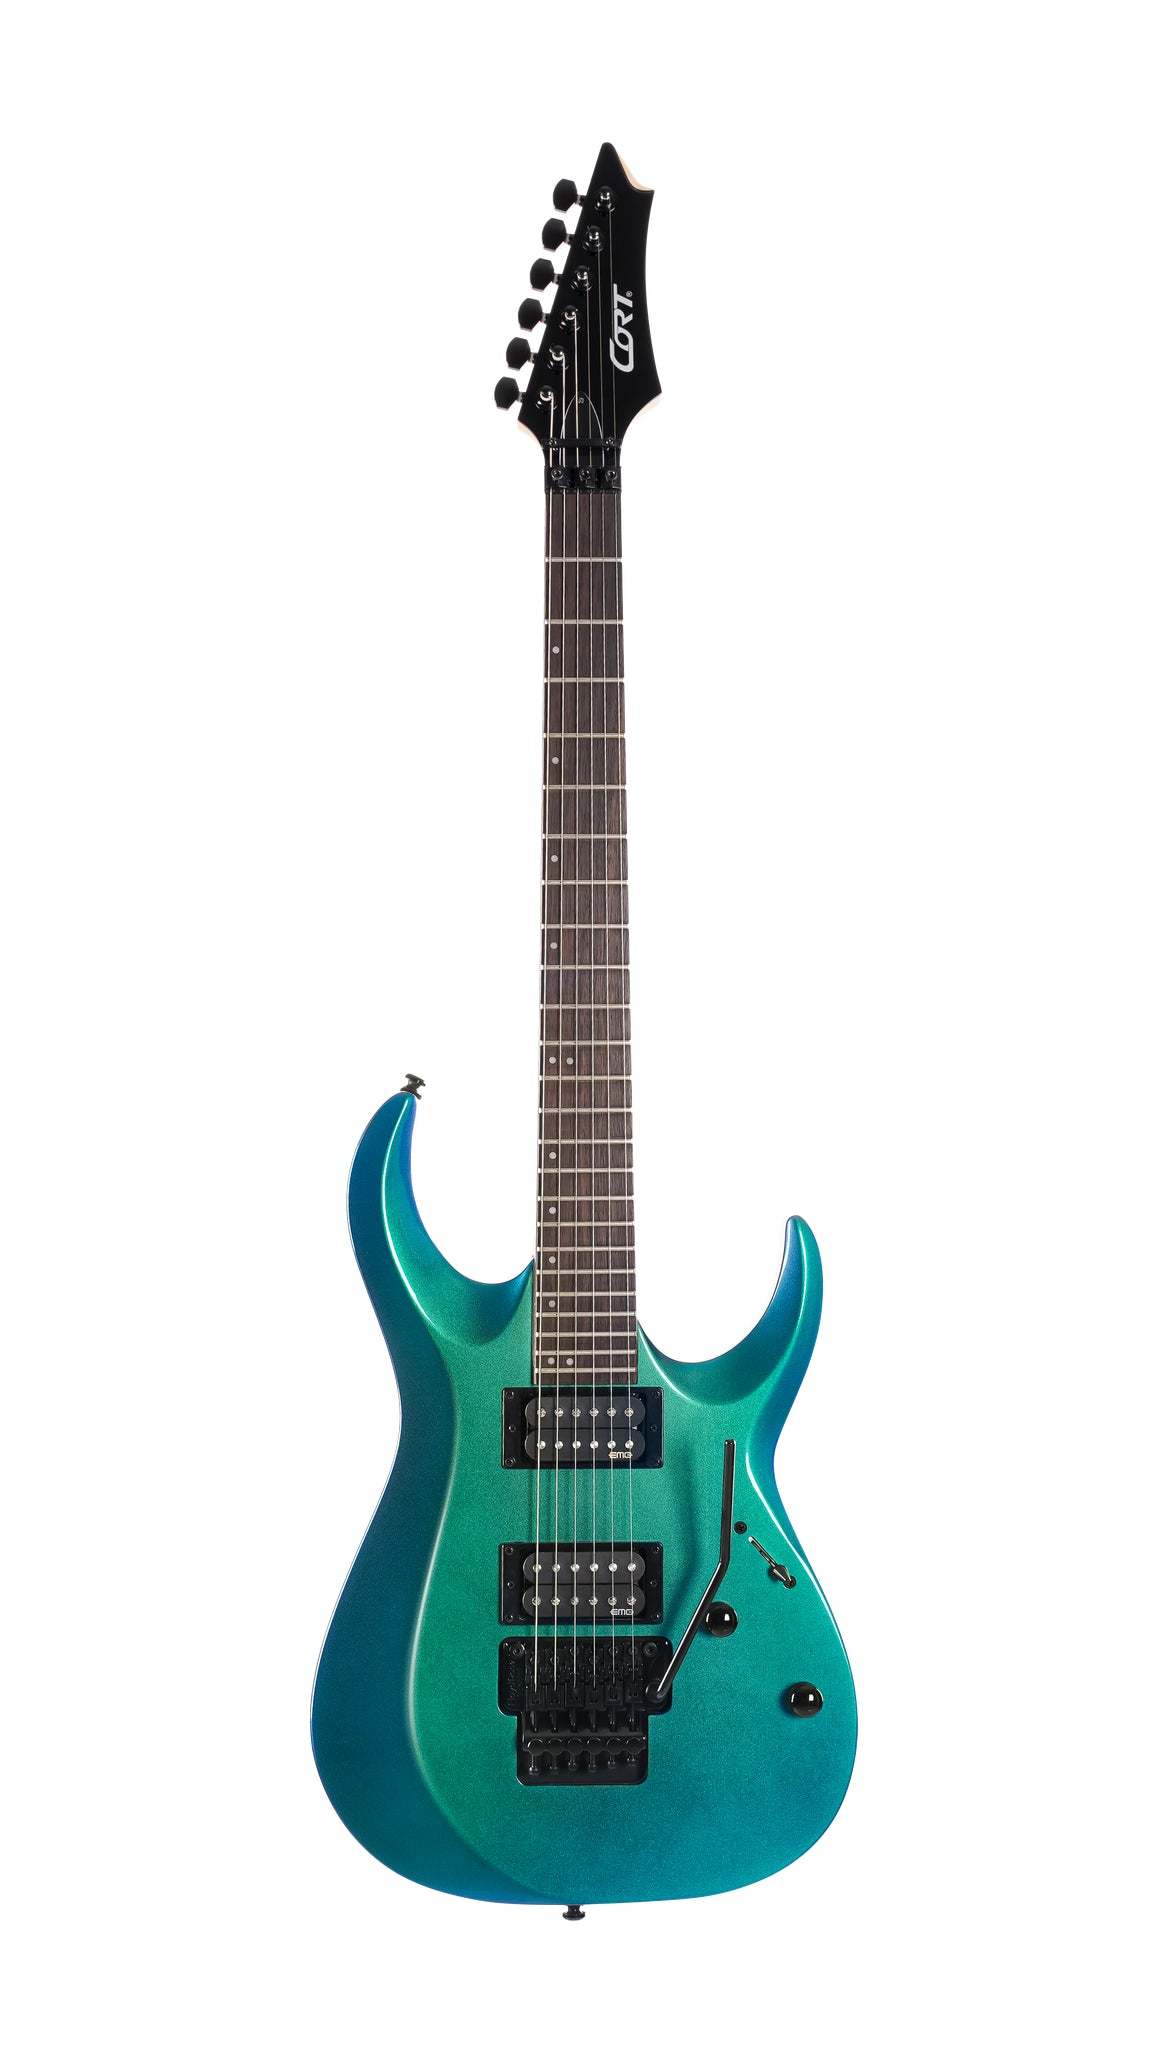 Cort X300 Flip Blue, Electric Guitar for sale at Richards Guitars.